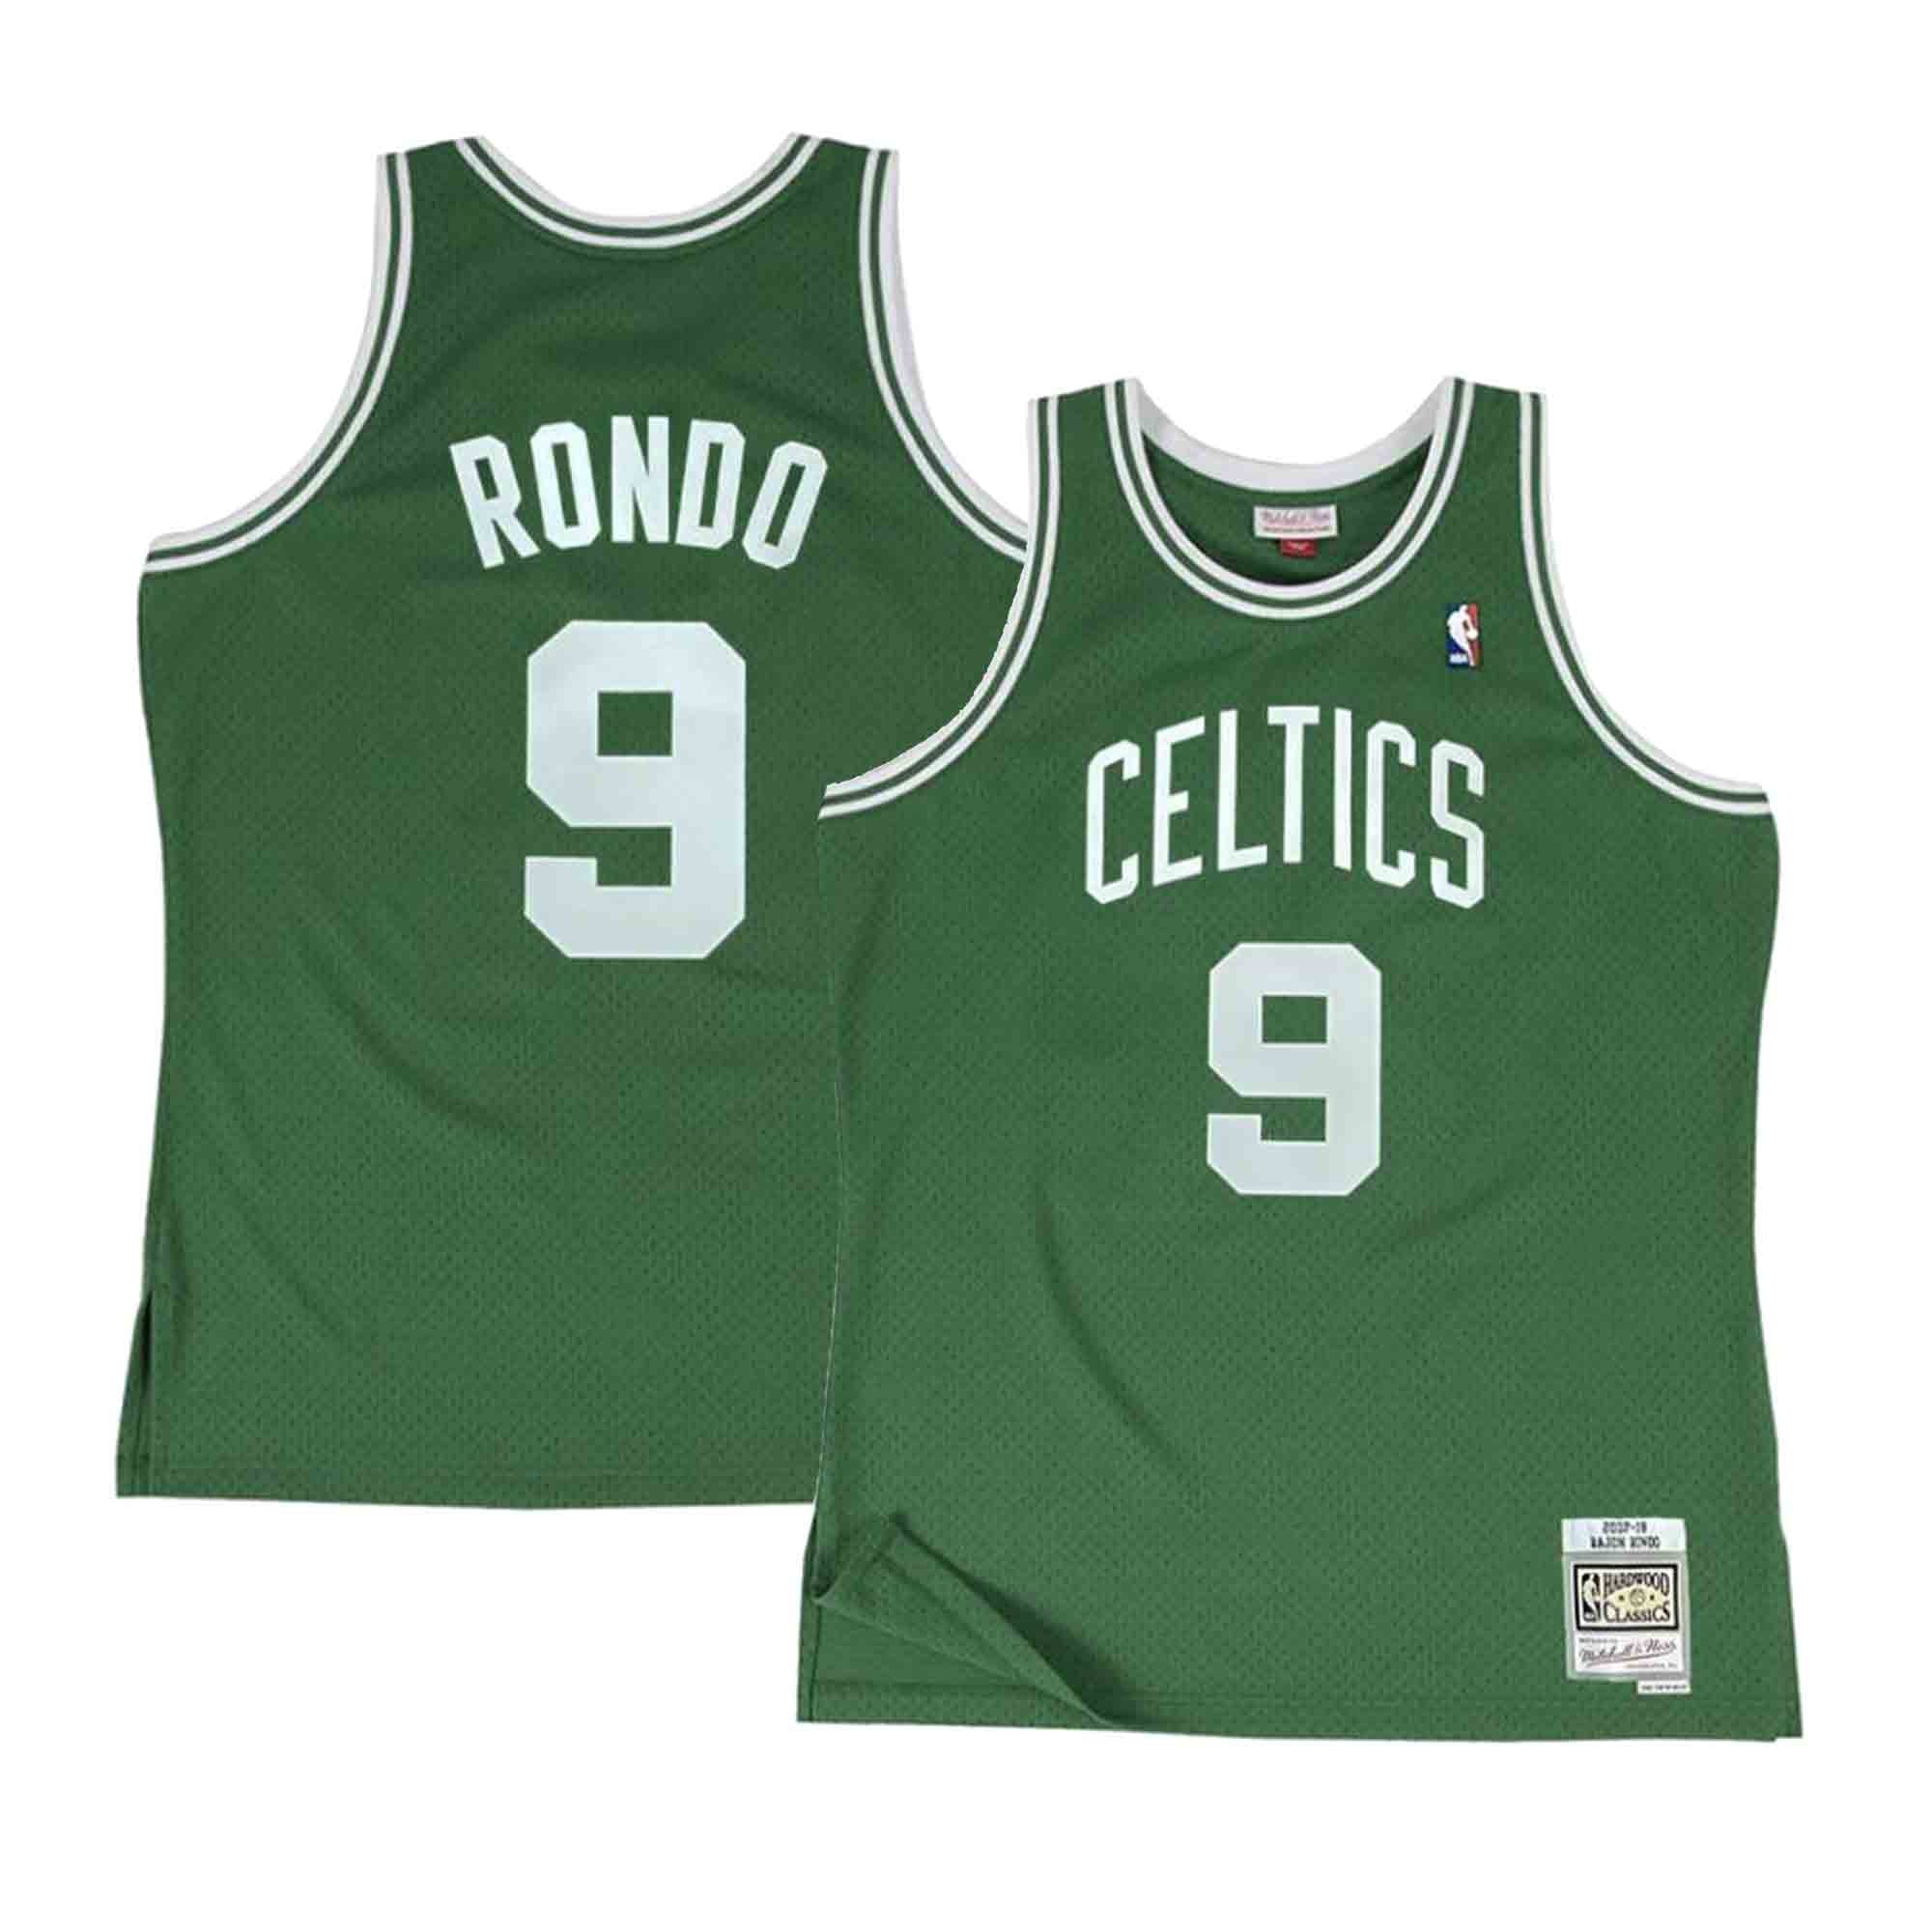 Boston Celtics - This designer has been reimagining NBA jerseys